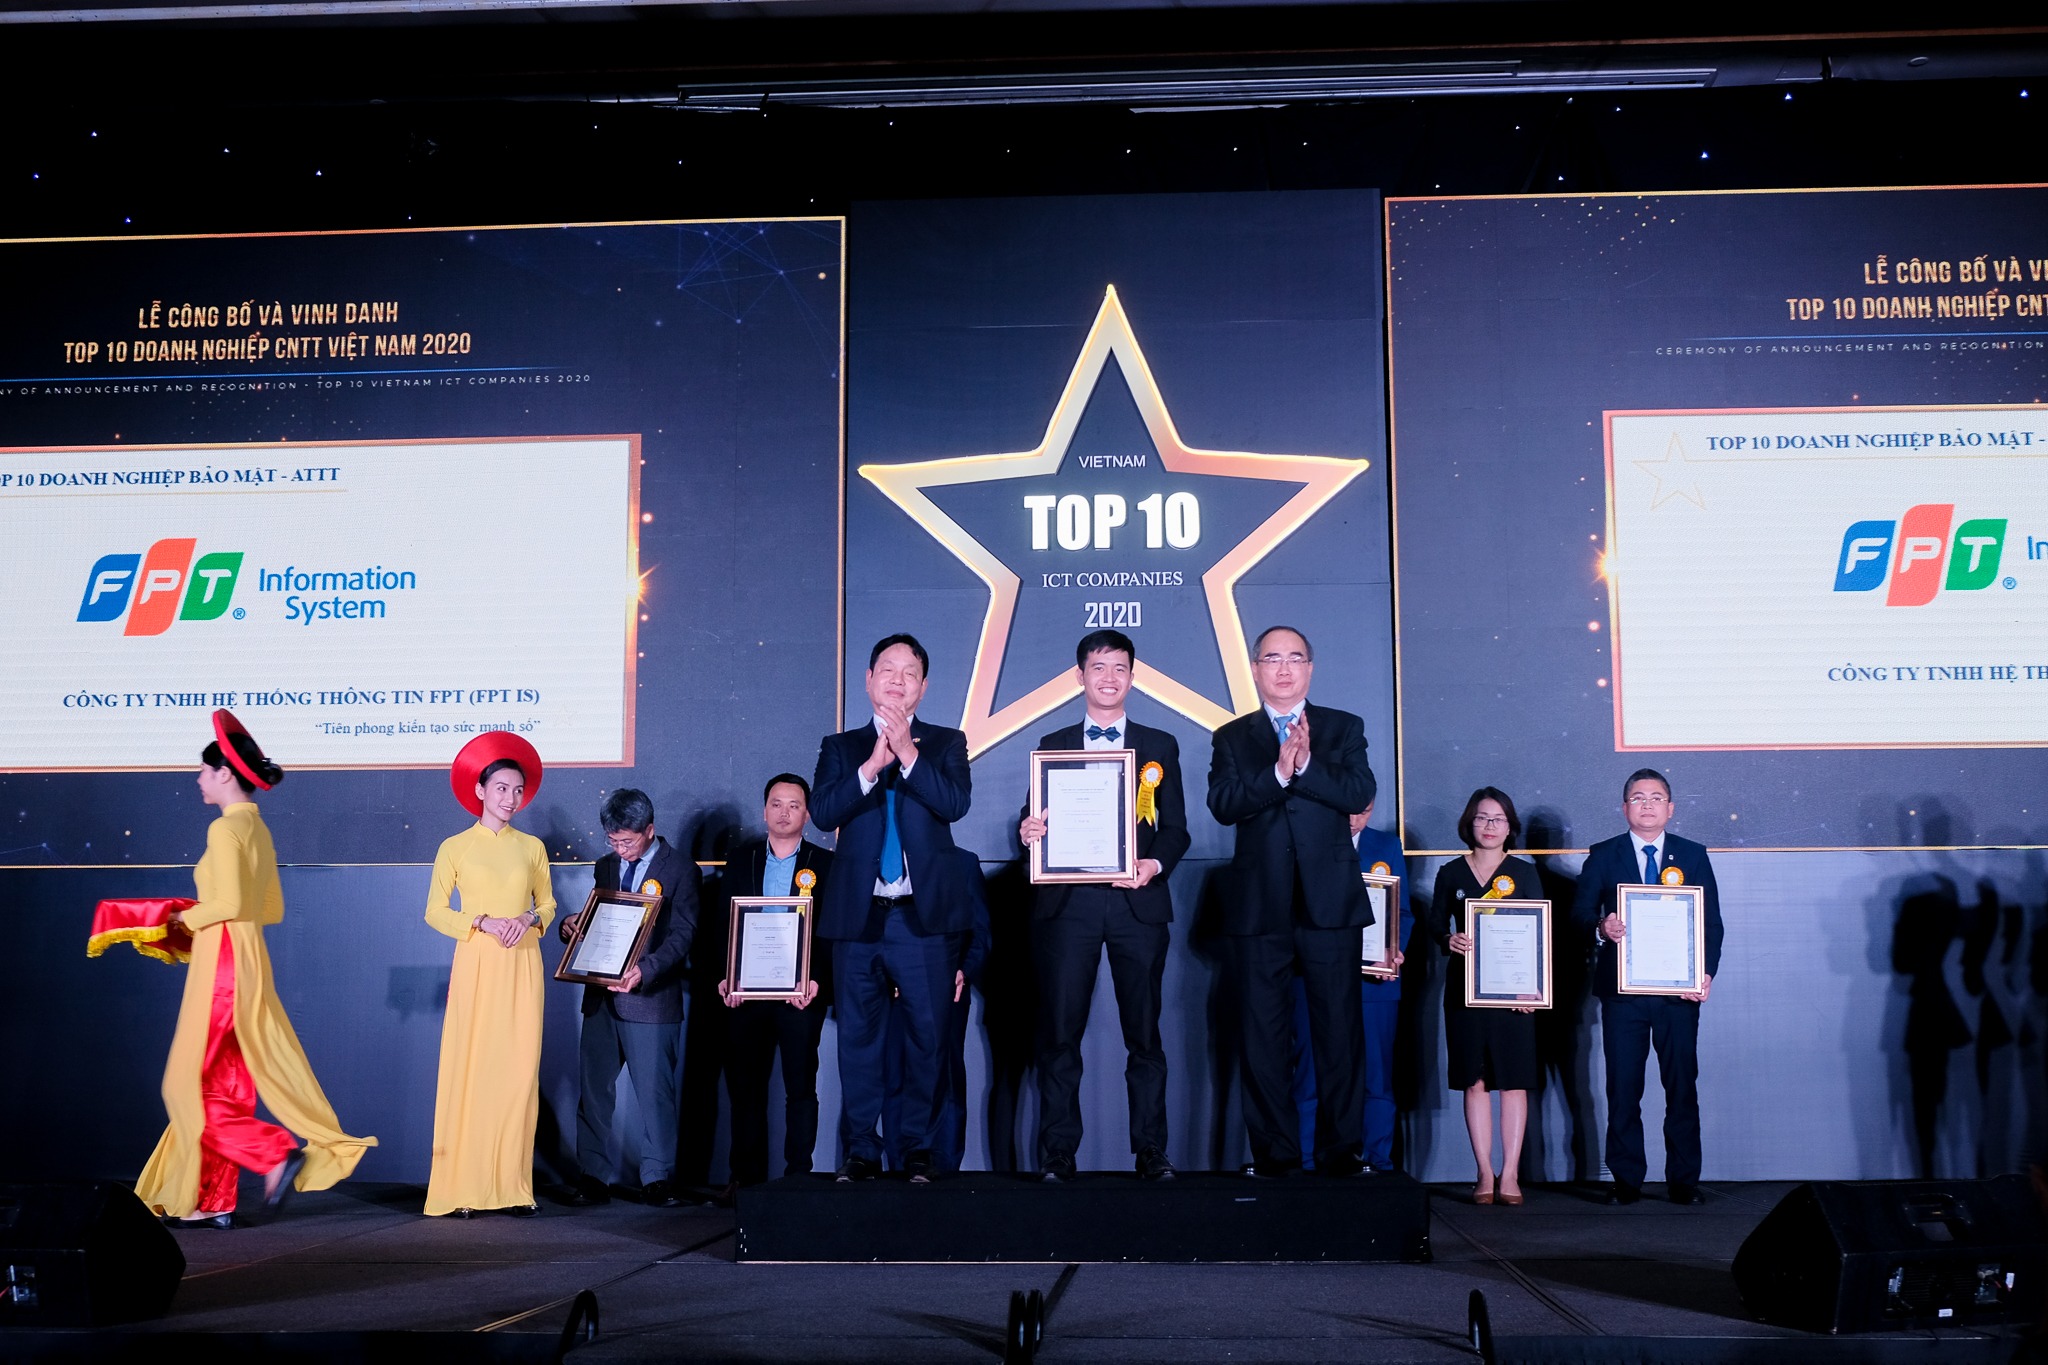 Top 10 Companies supplying Information Security Solutions in Vietnam 2020